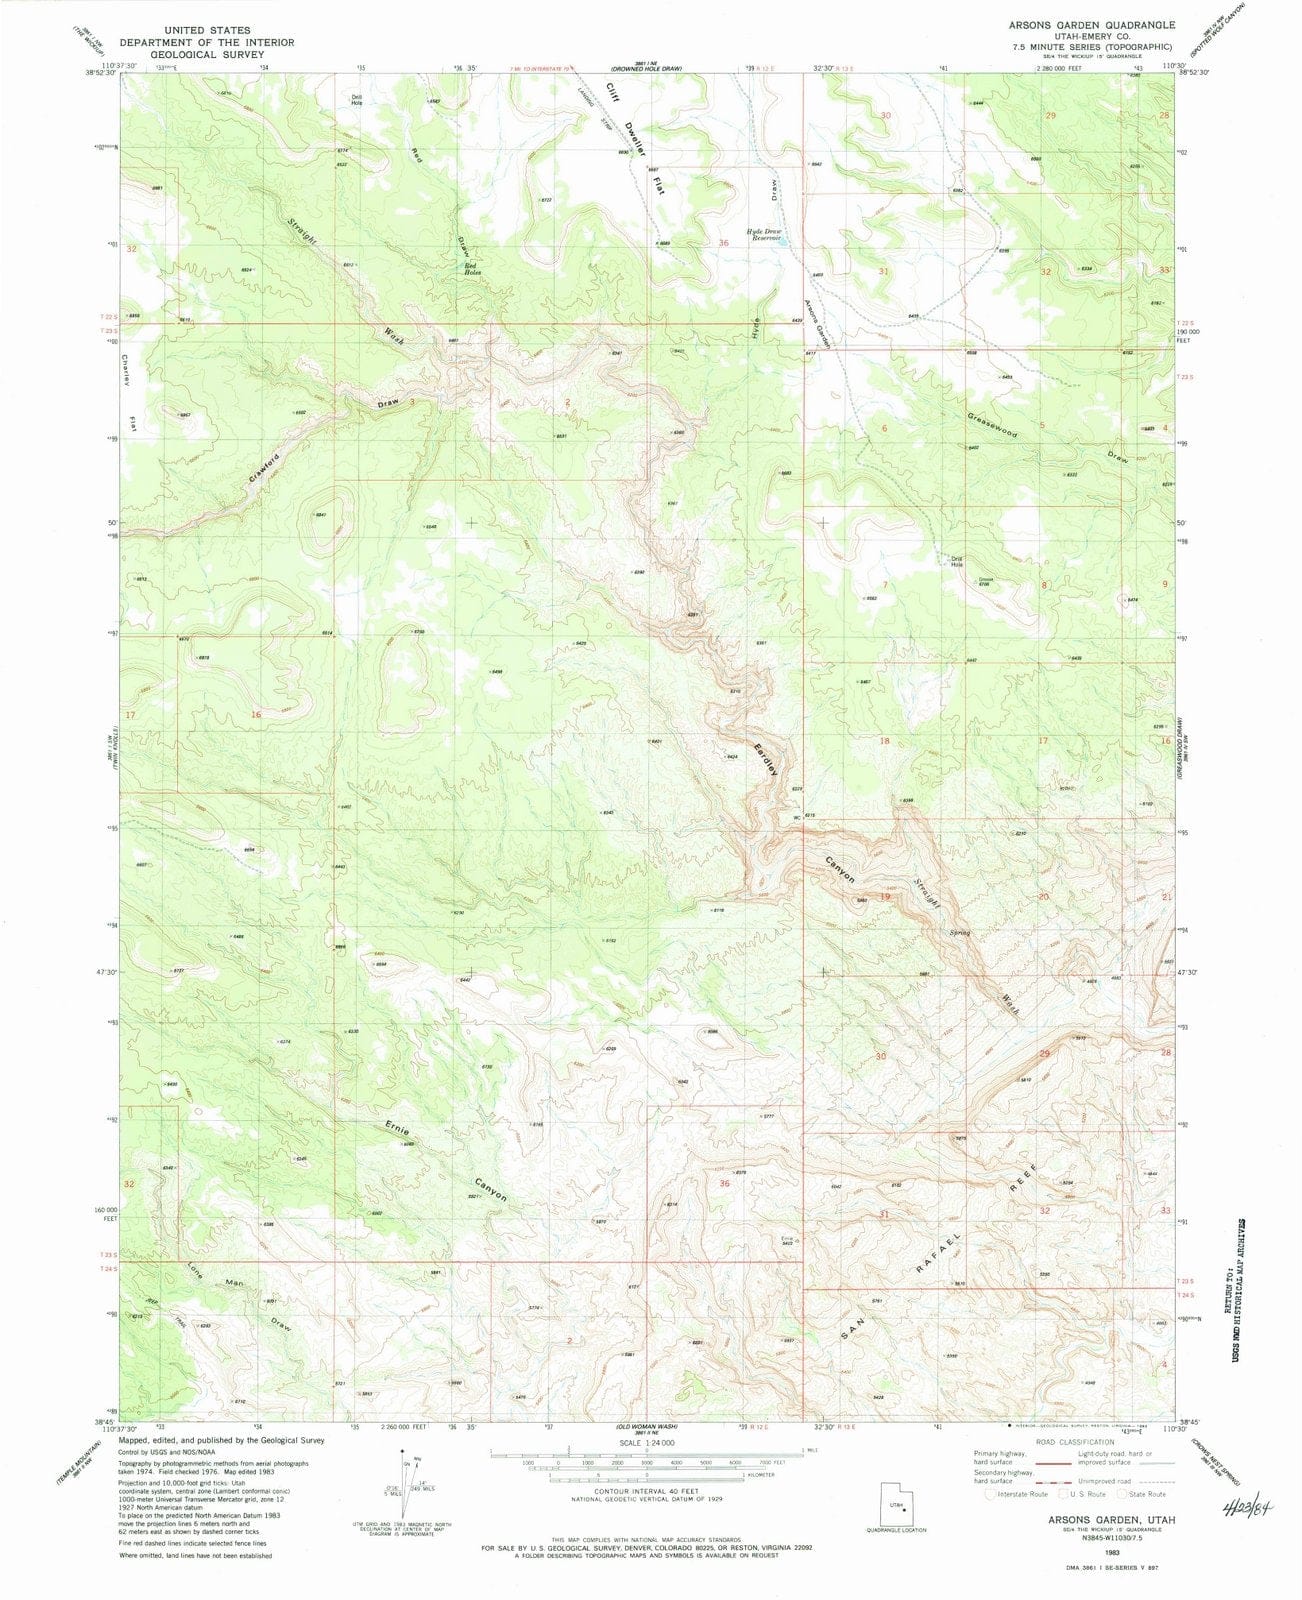 1983 Arsons Garden, UT - Utah - USGS Topographic Map